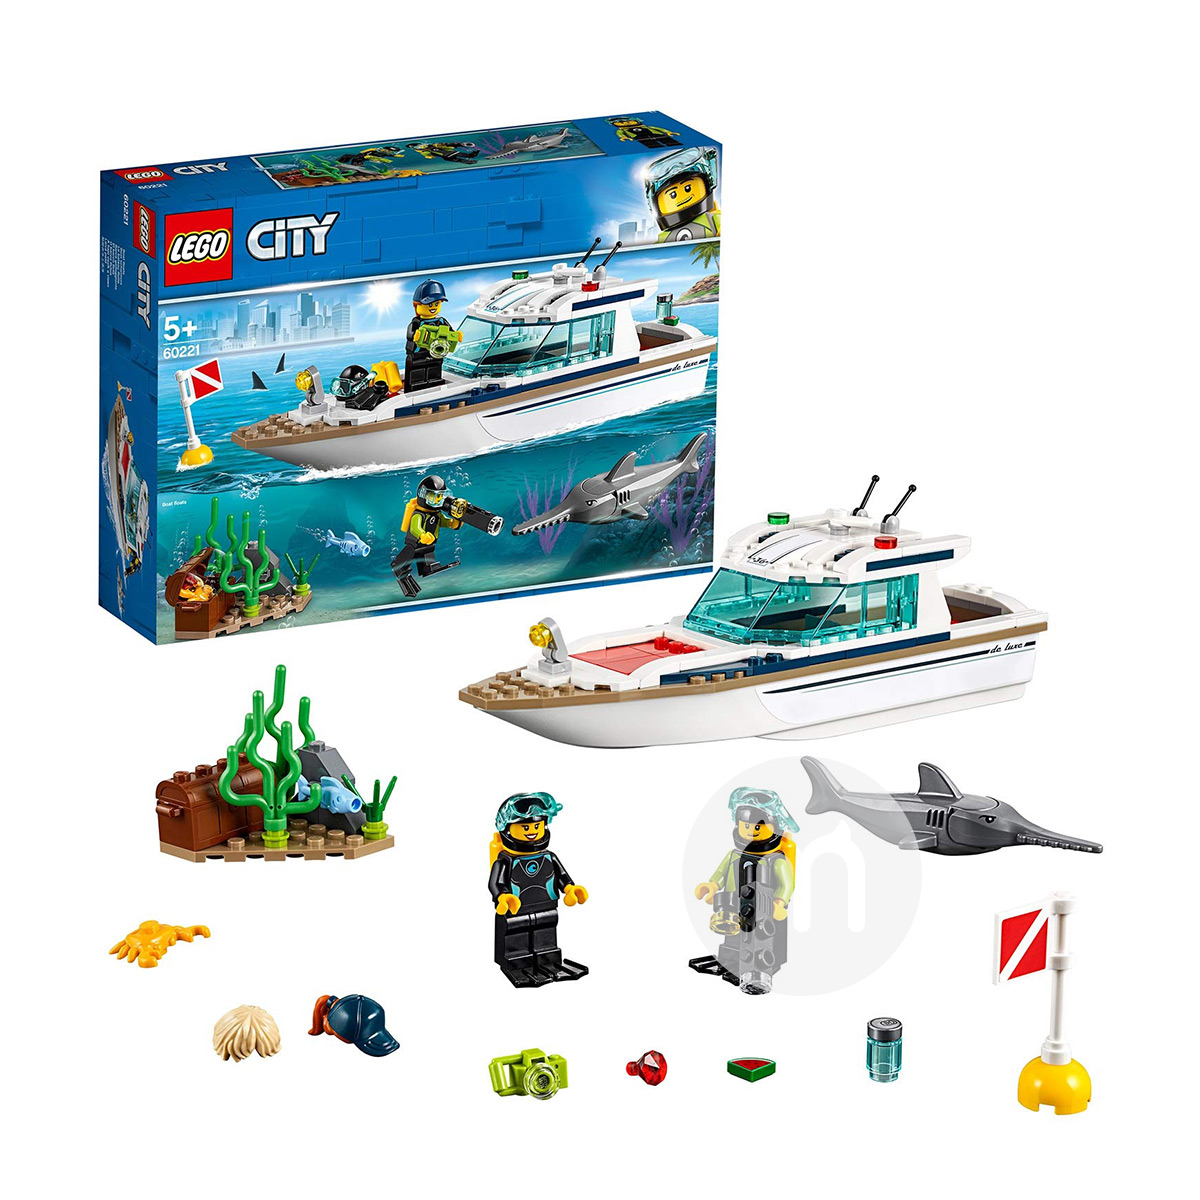 LEGO 덴마크시티시리즈다이브요트 60221 해외판